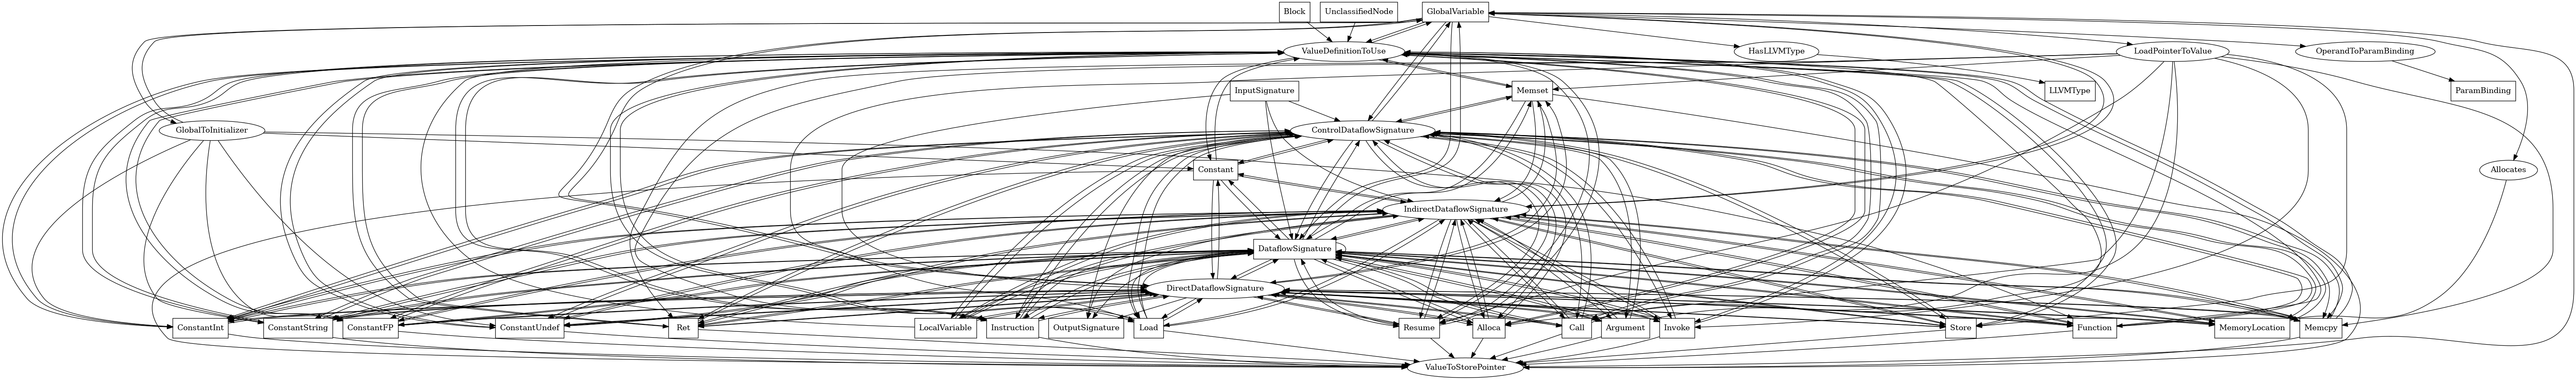 Entity-relationship diagram for GlobalVariable nodes